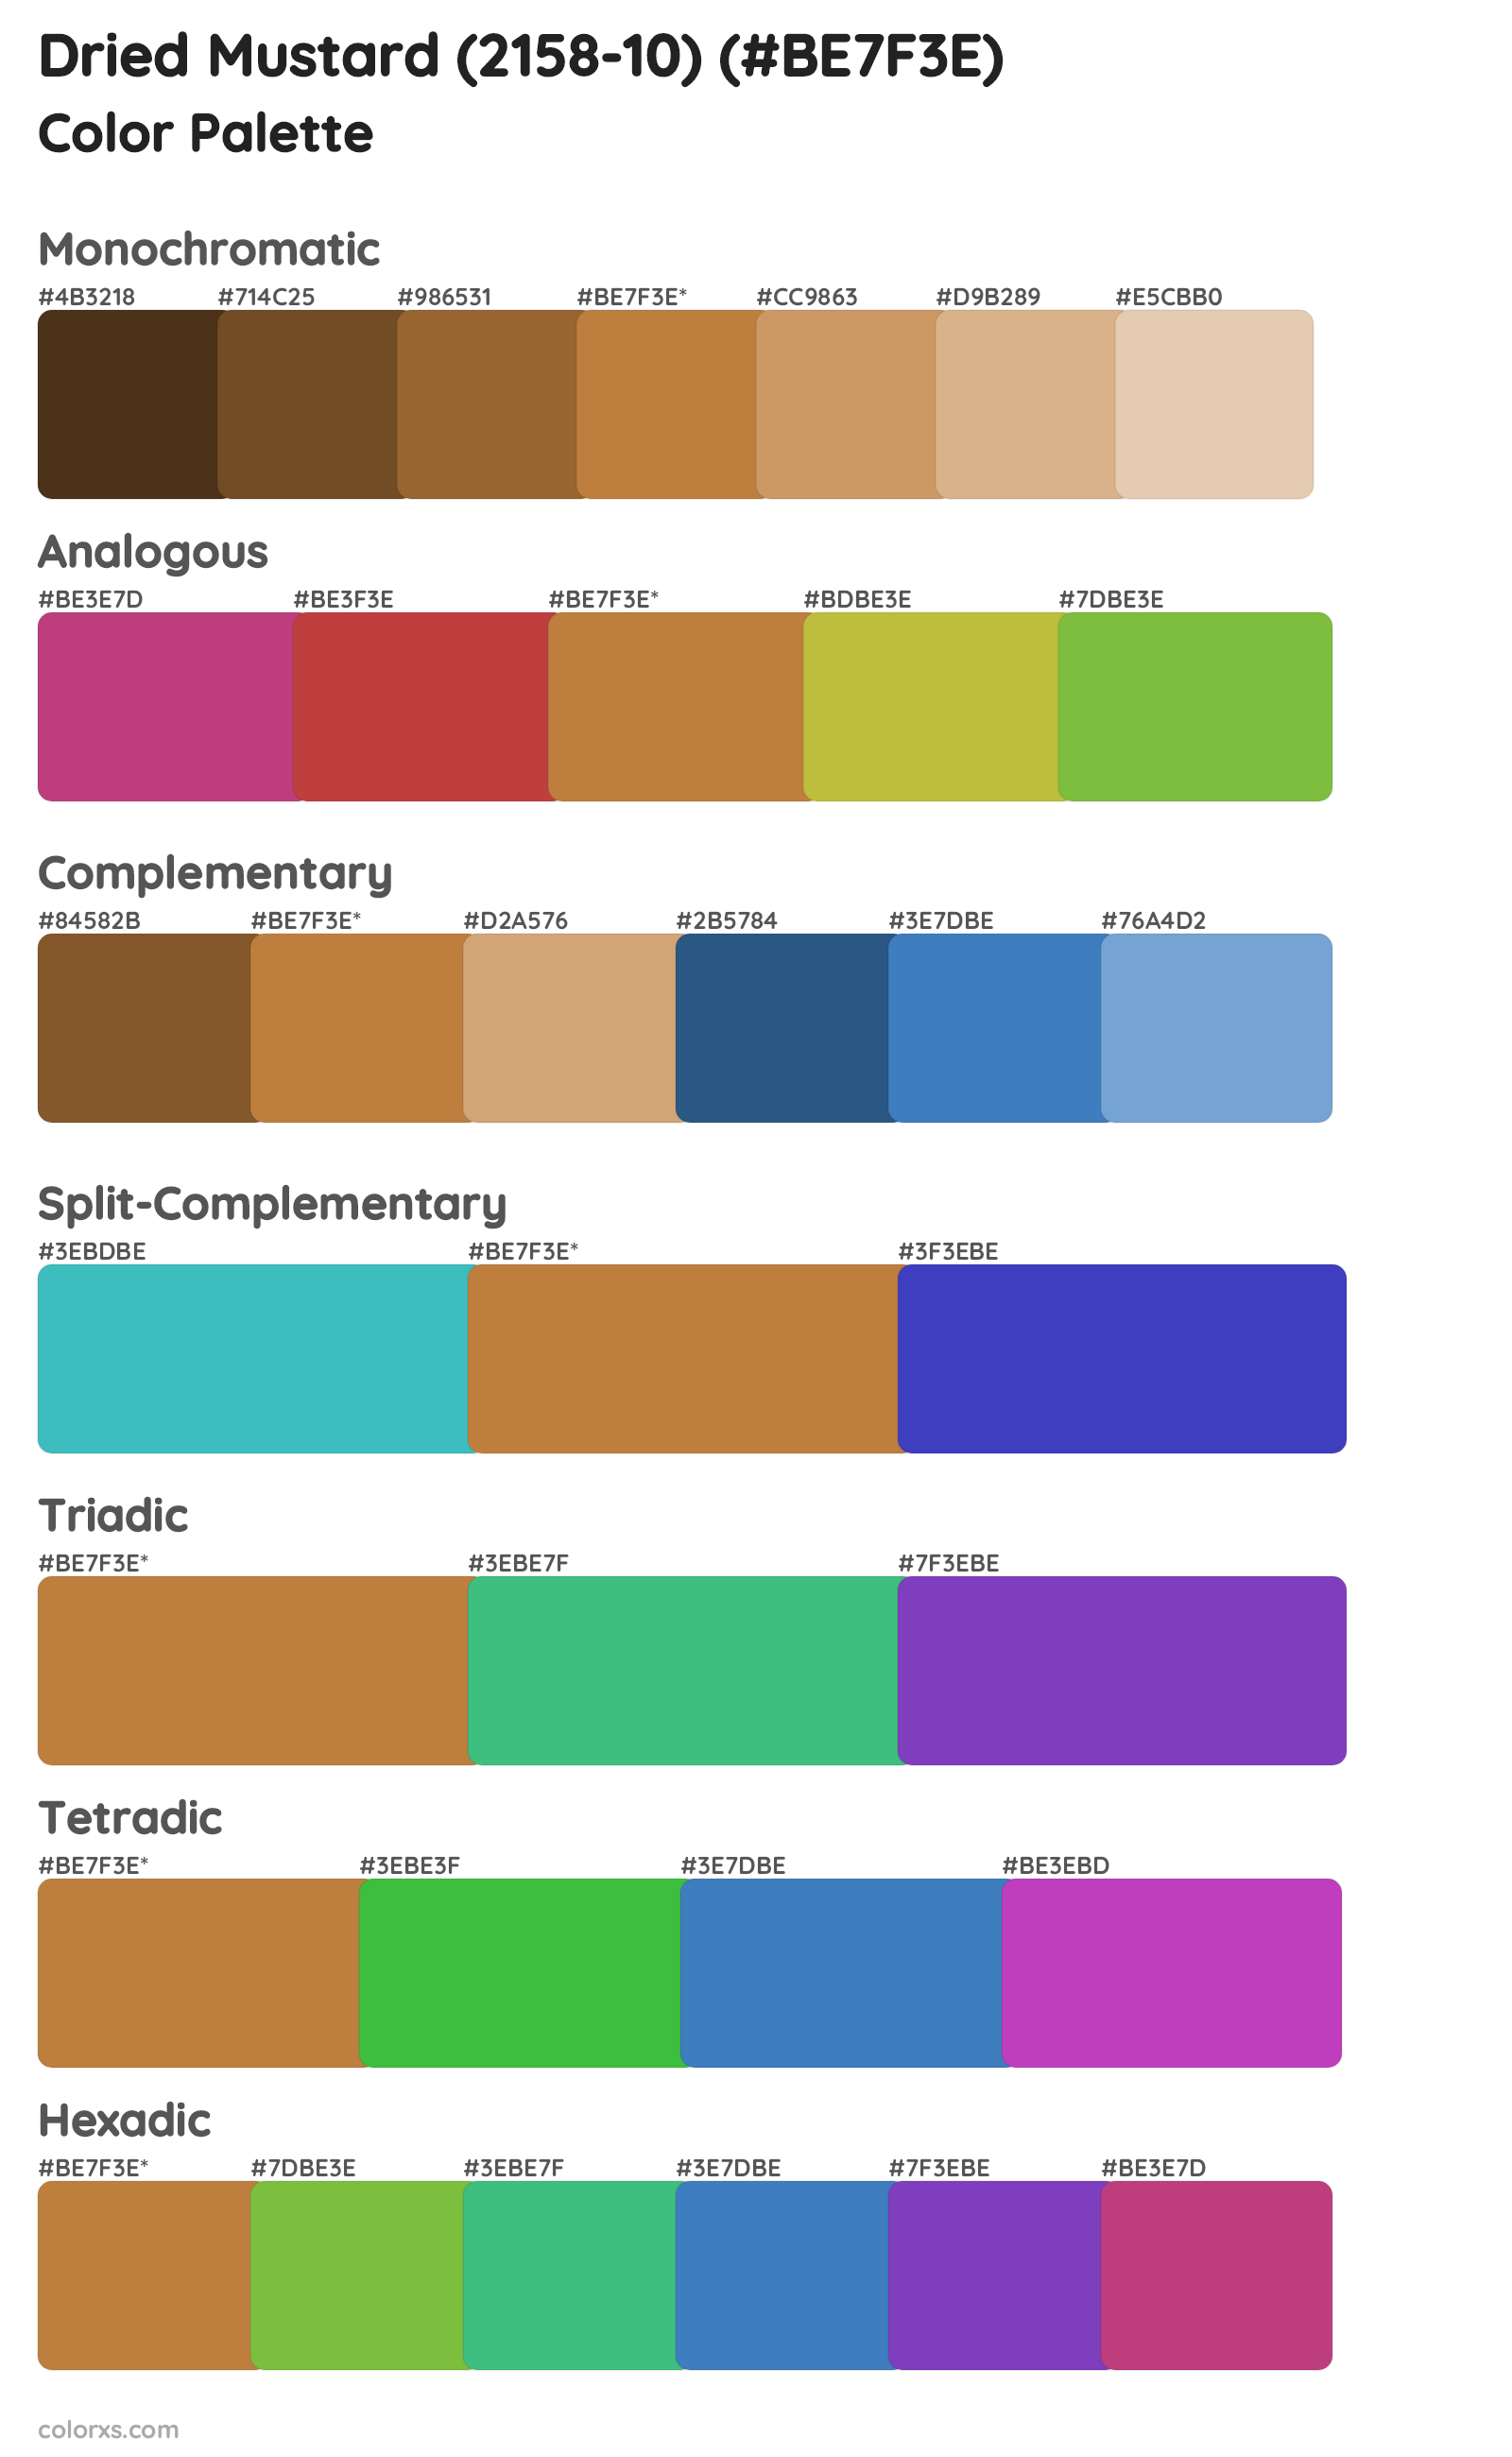 Dried Mustard (2158-10) Color Scheme Palettes